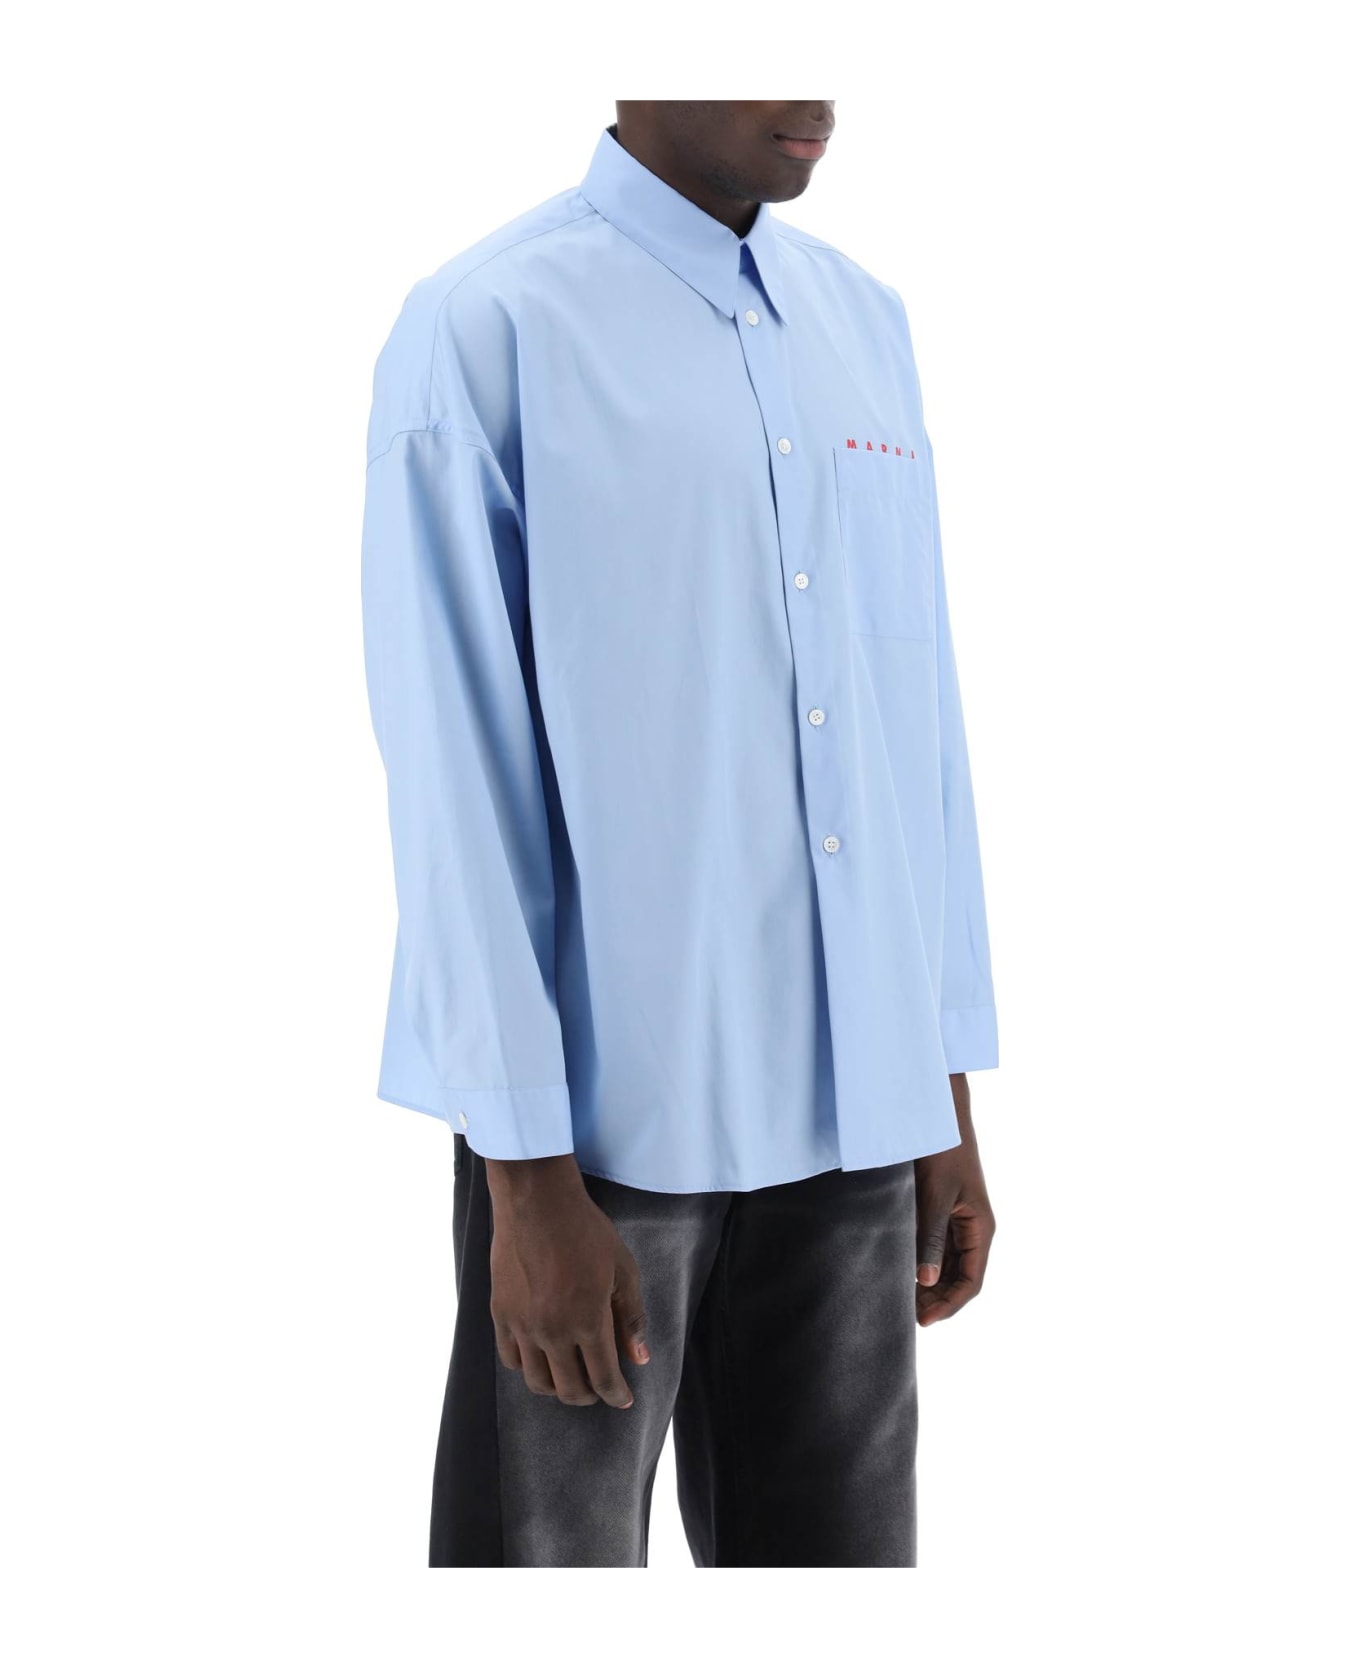 Marni Boxy Shirt With Italian Collar - IRIS BLUE (Light blue) シャツ